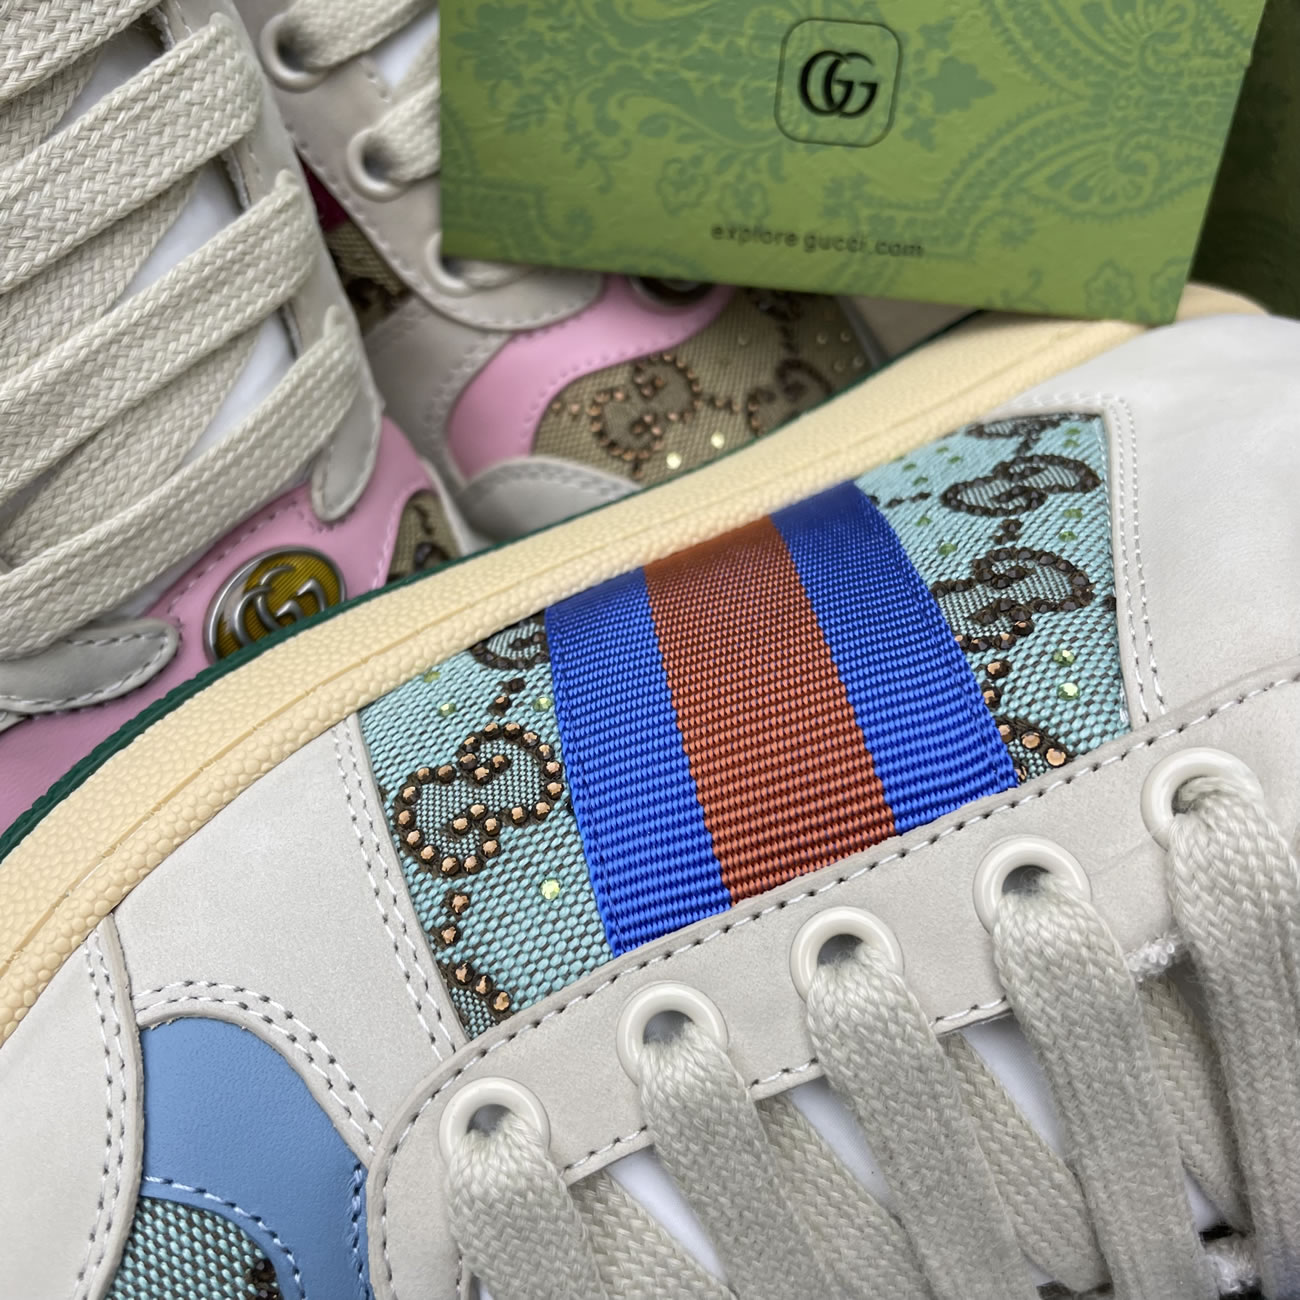 G U C C I Shoes Sneakers 4 Colors (9) - newkick.org